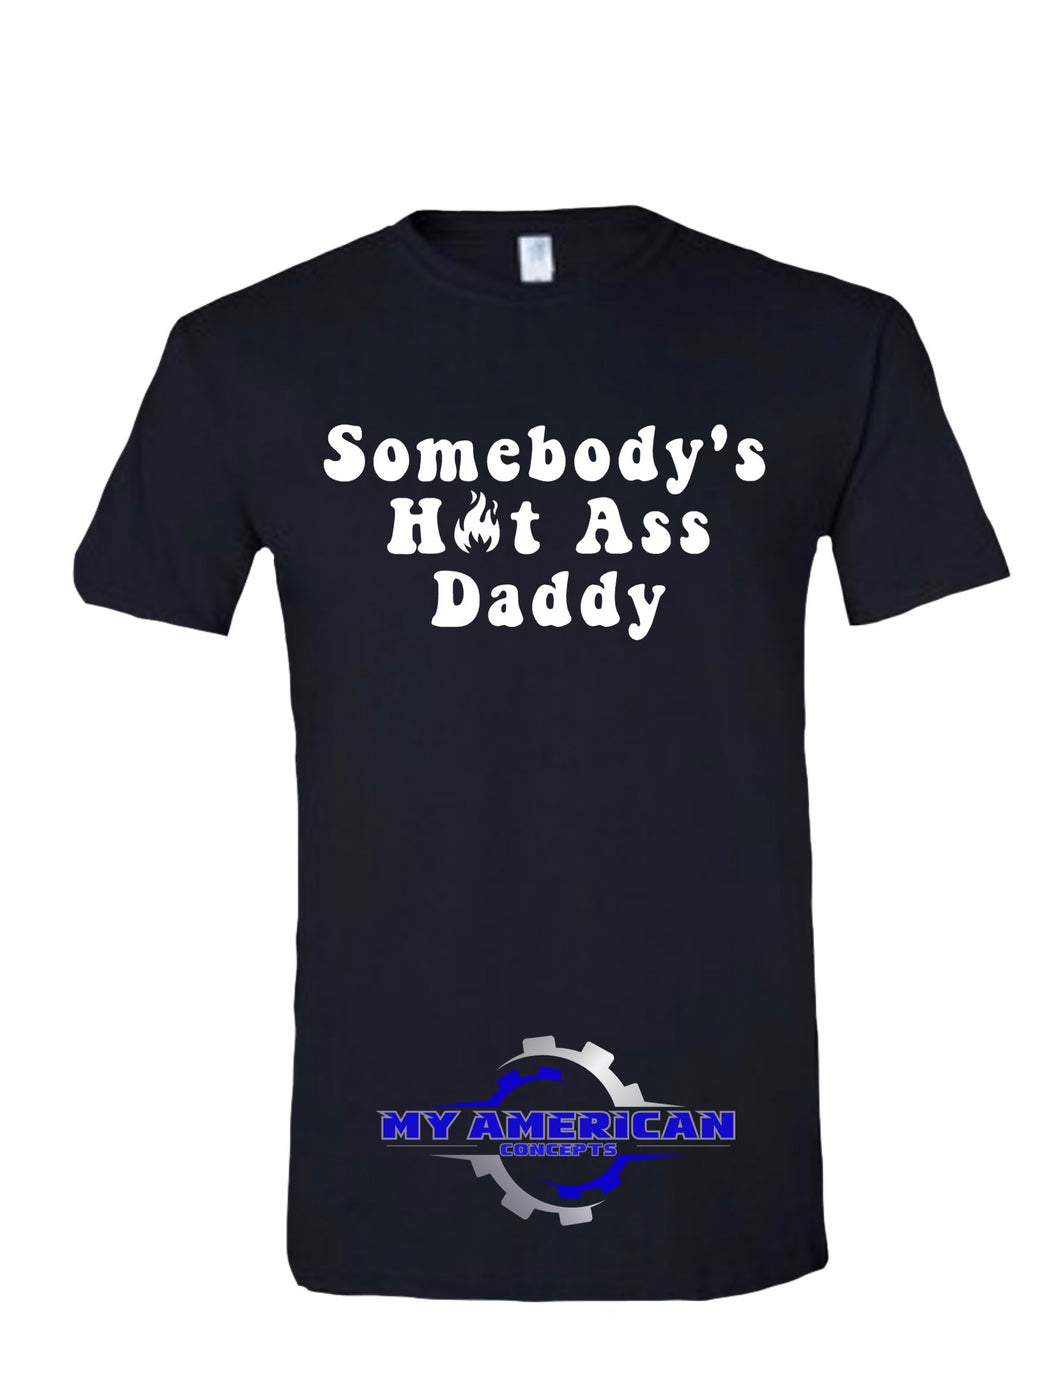 Somebody's Hot Ass Daddy- Men’s t-shirt!